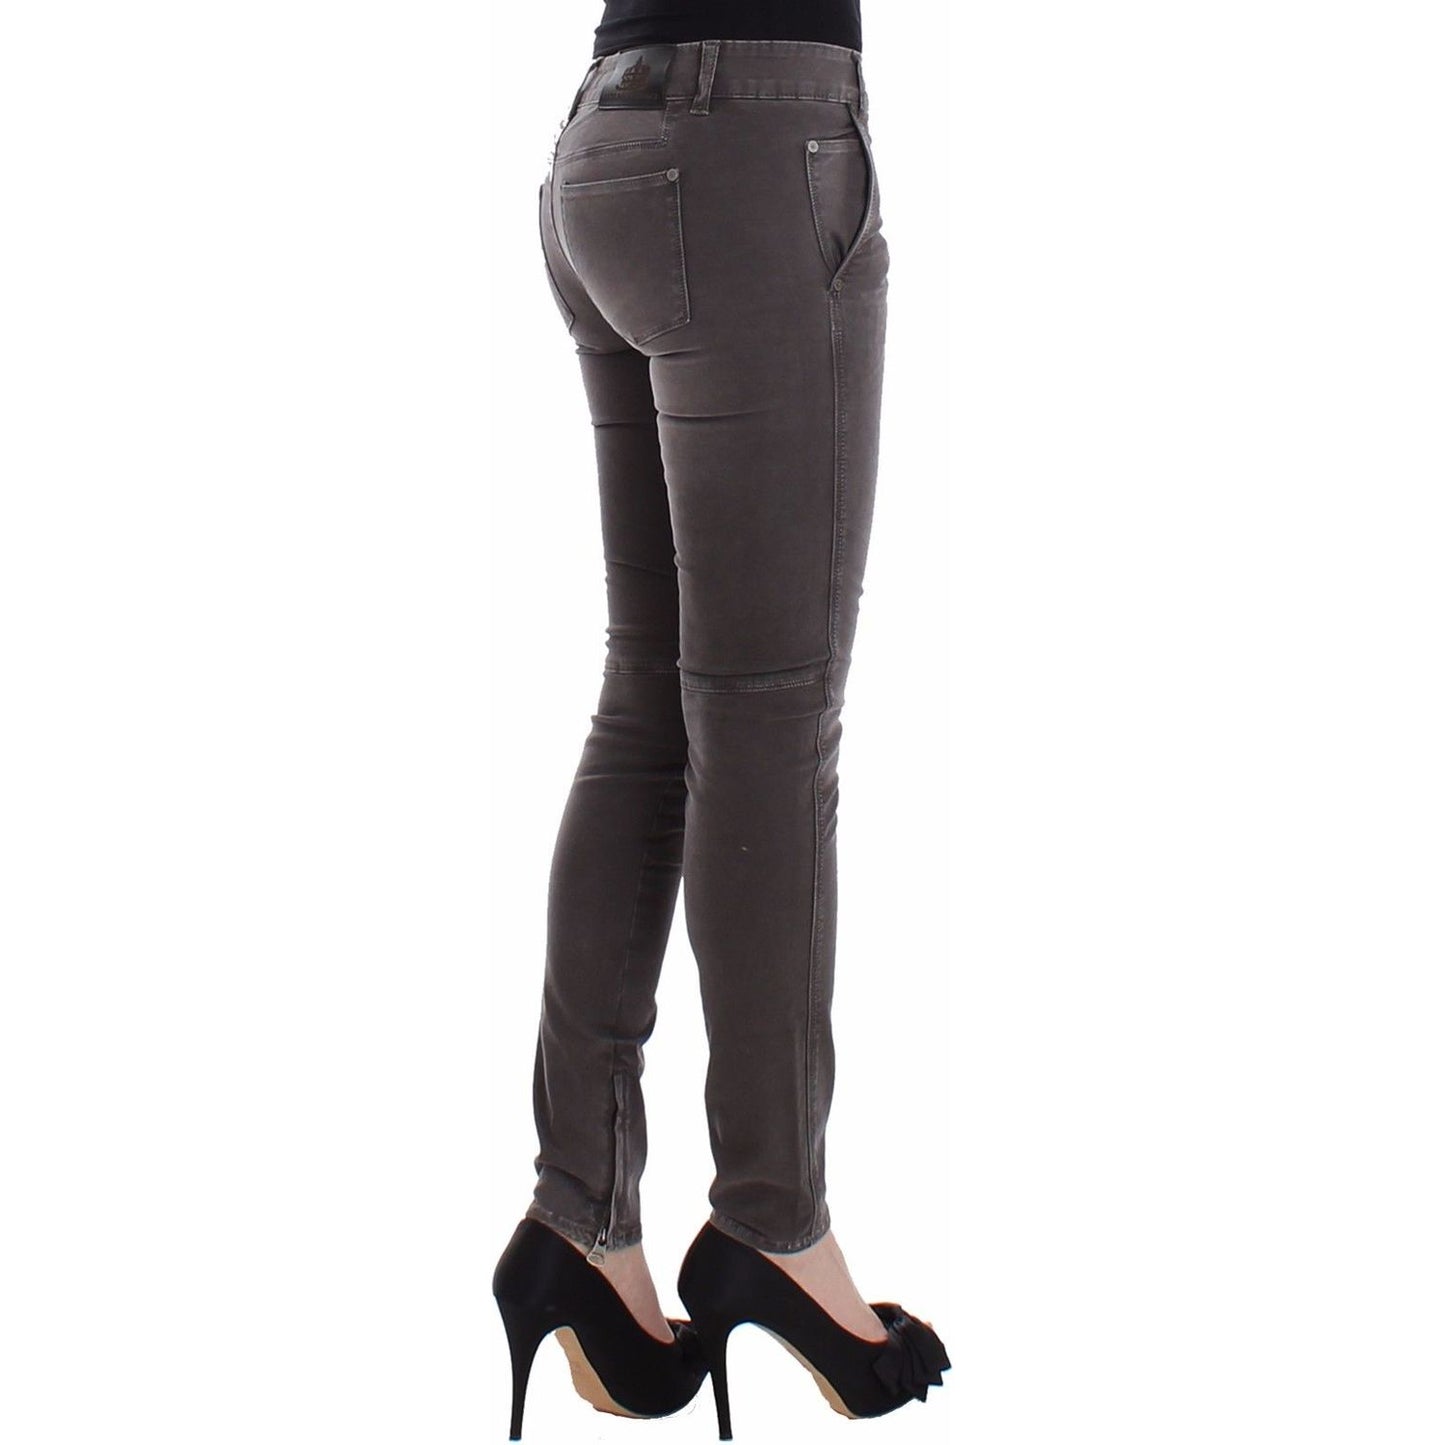 Ermanno Scervino Chic Gray Slim Leg Jeans - Elegance Meets Comfort gray-slim-jeans-denim-pants-skinny-leg-stretch-1 37416-gray-slim-jeans-denim-pants-skinny-leg-stretch-2-3.jpg